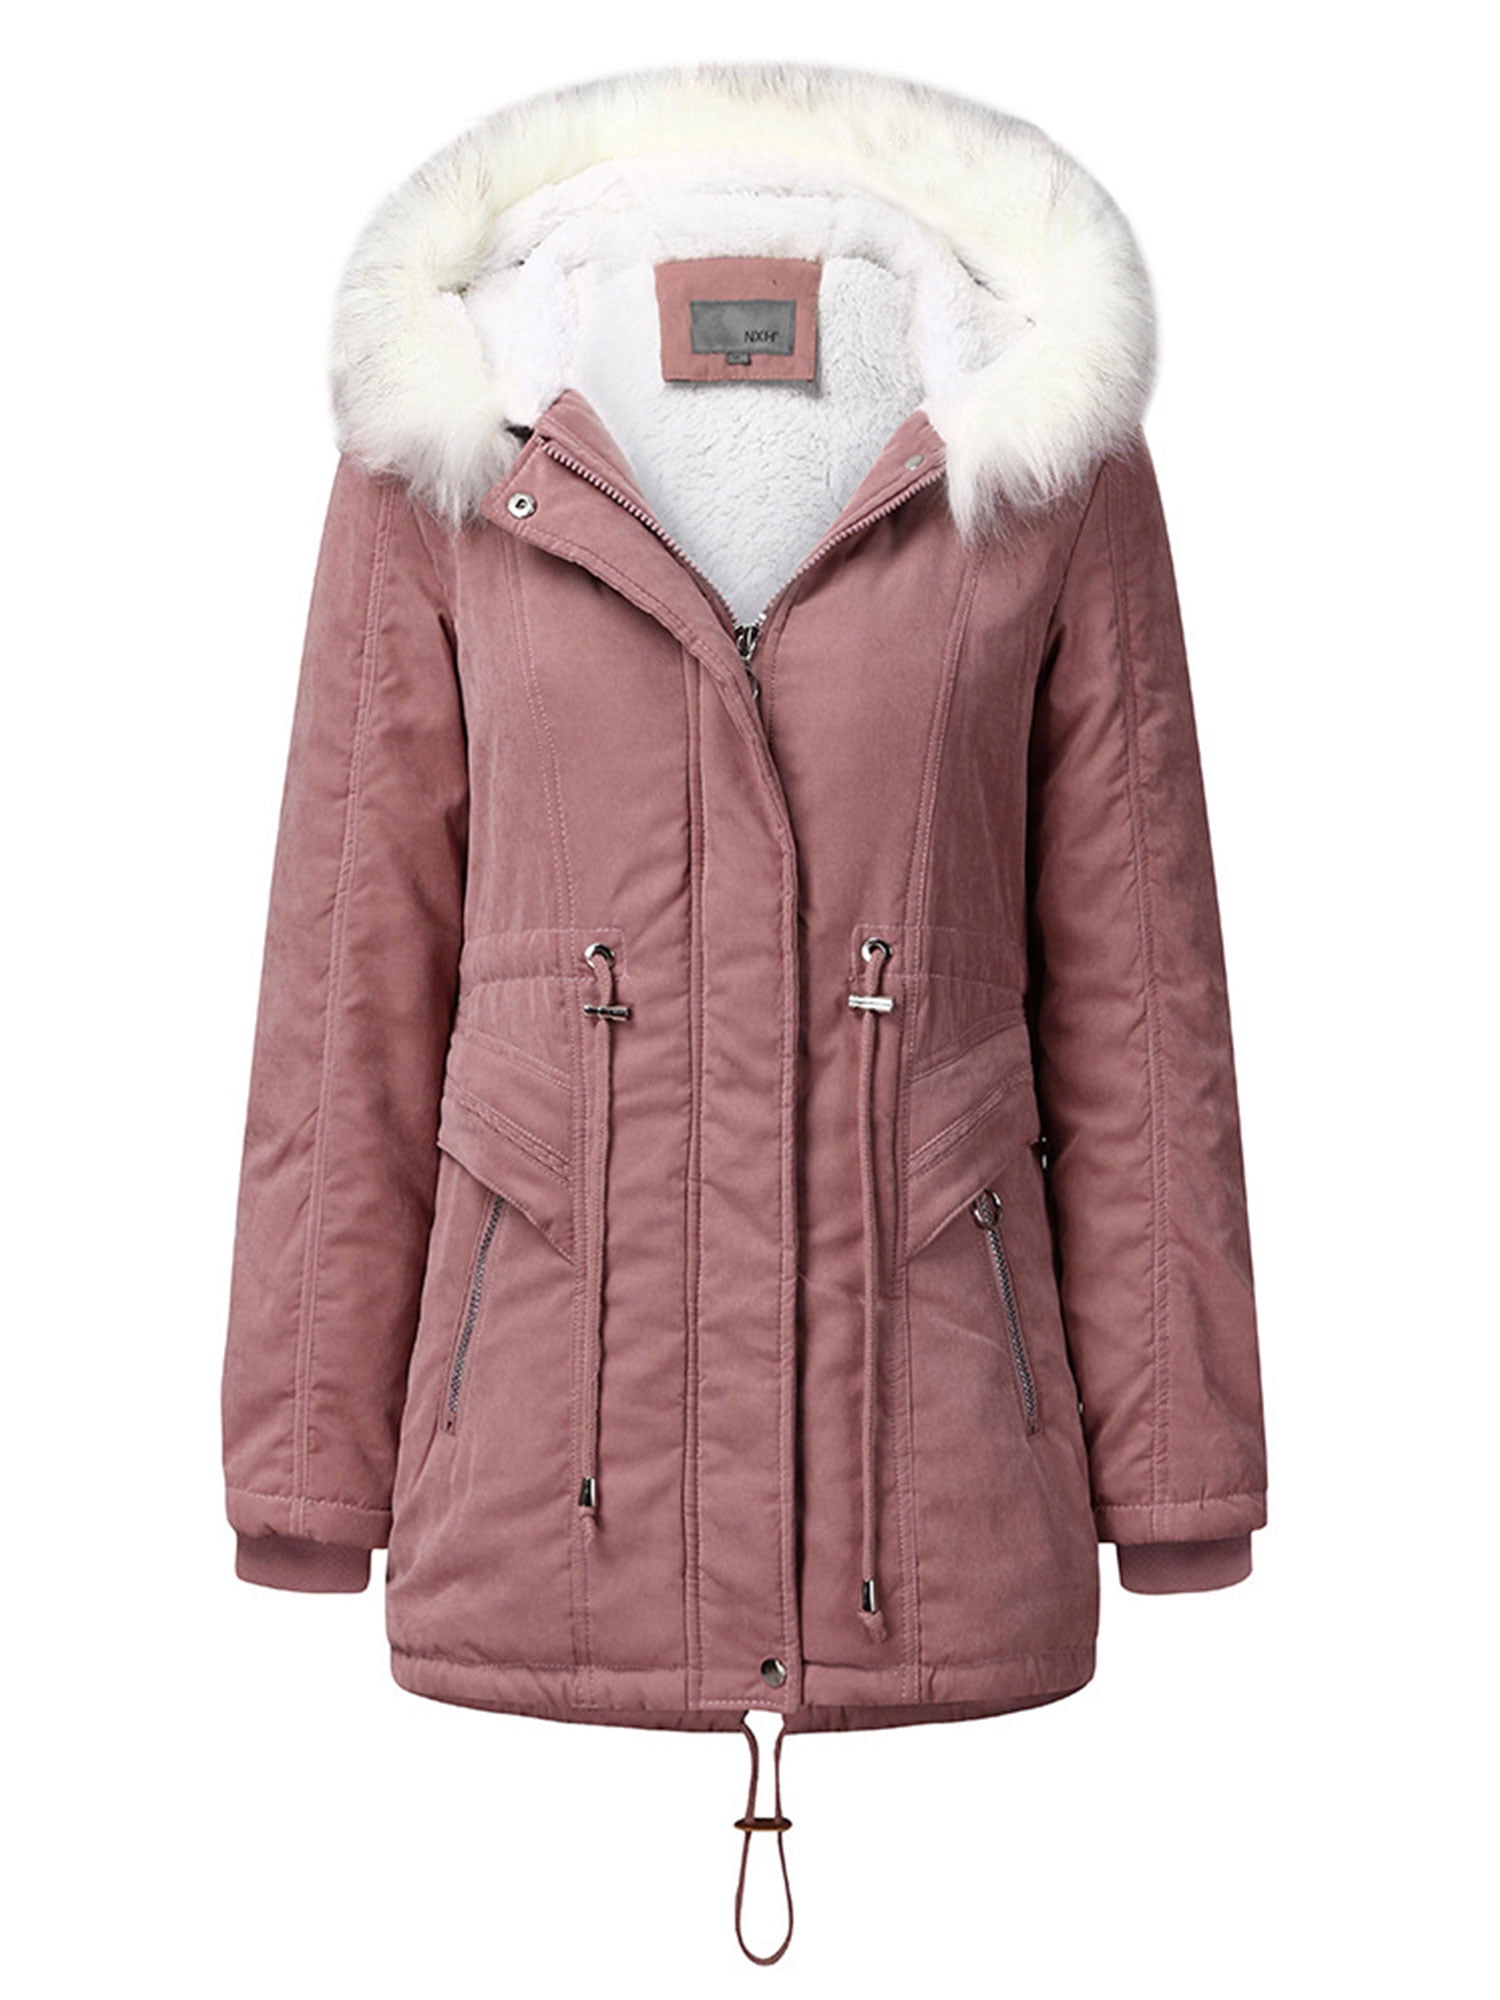 FashionWomen's winter thicken fur coat Long Fox fur jacket warm Fur Hooded Parka 